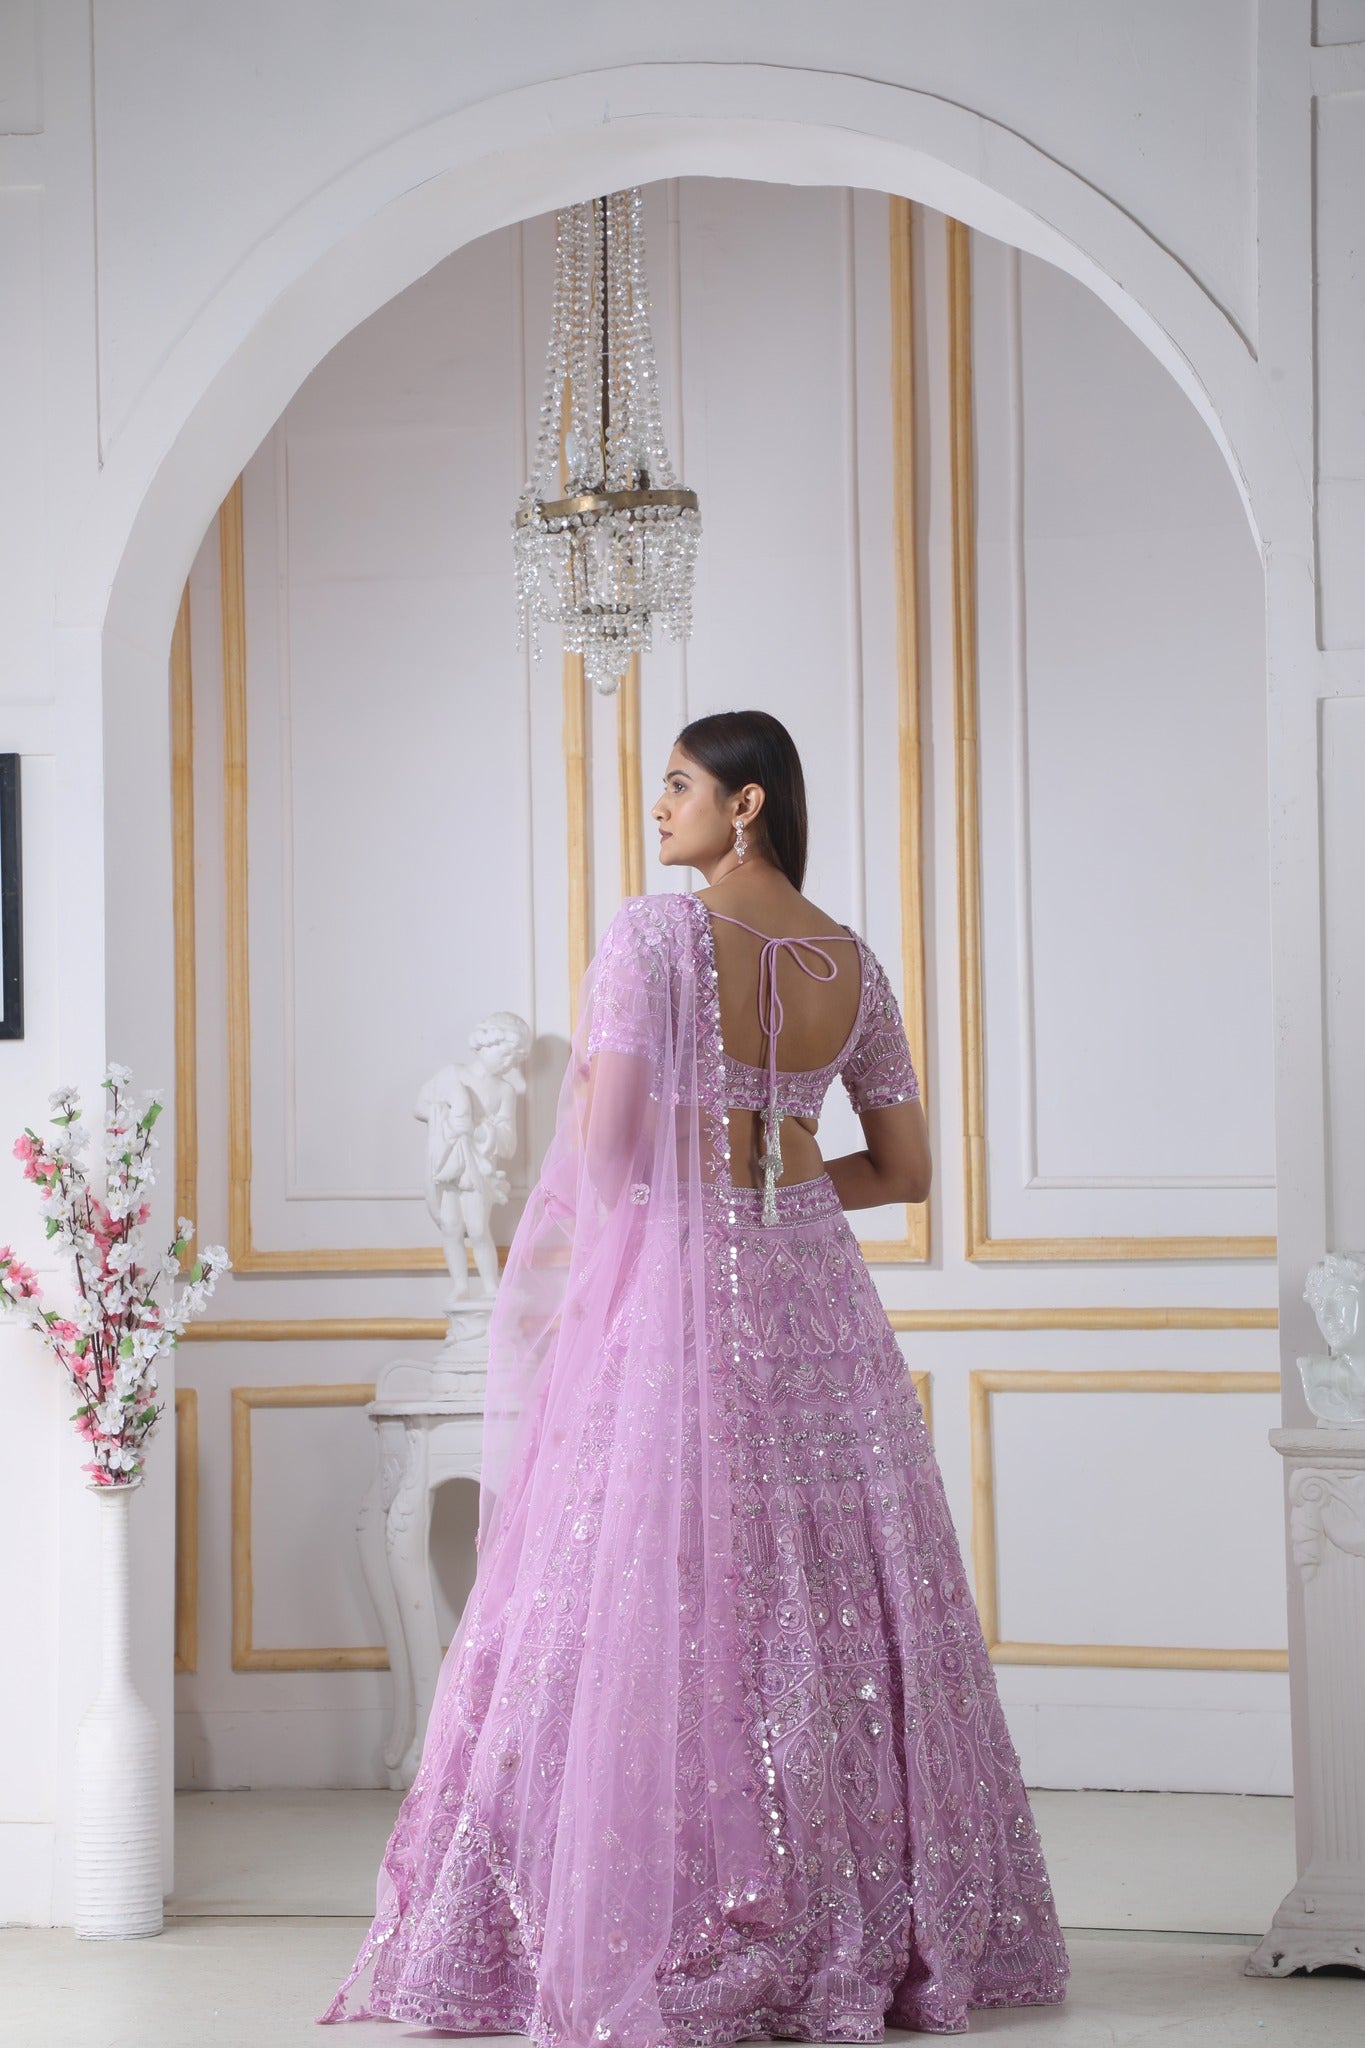 Irresistible Light Pink Colored Designer Lehenga Choli